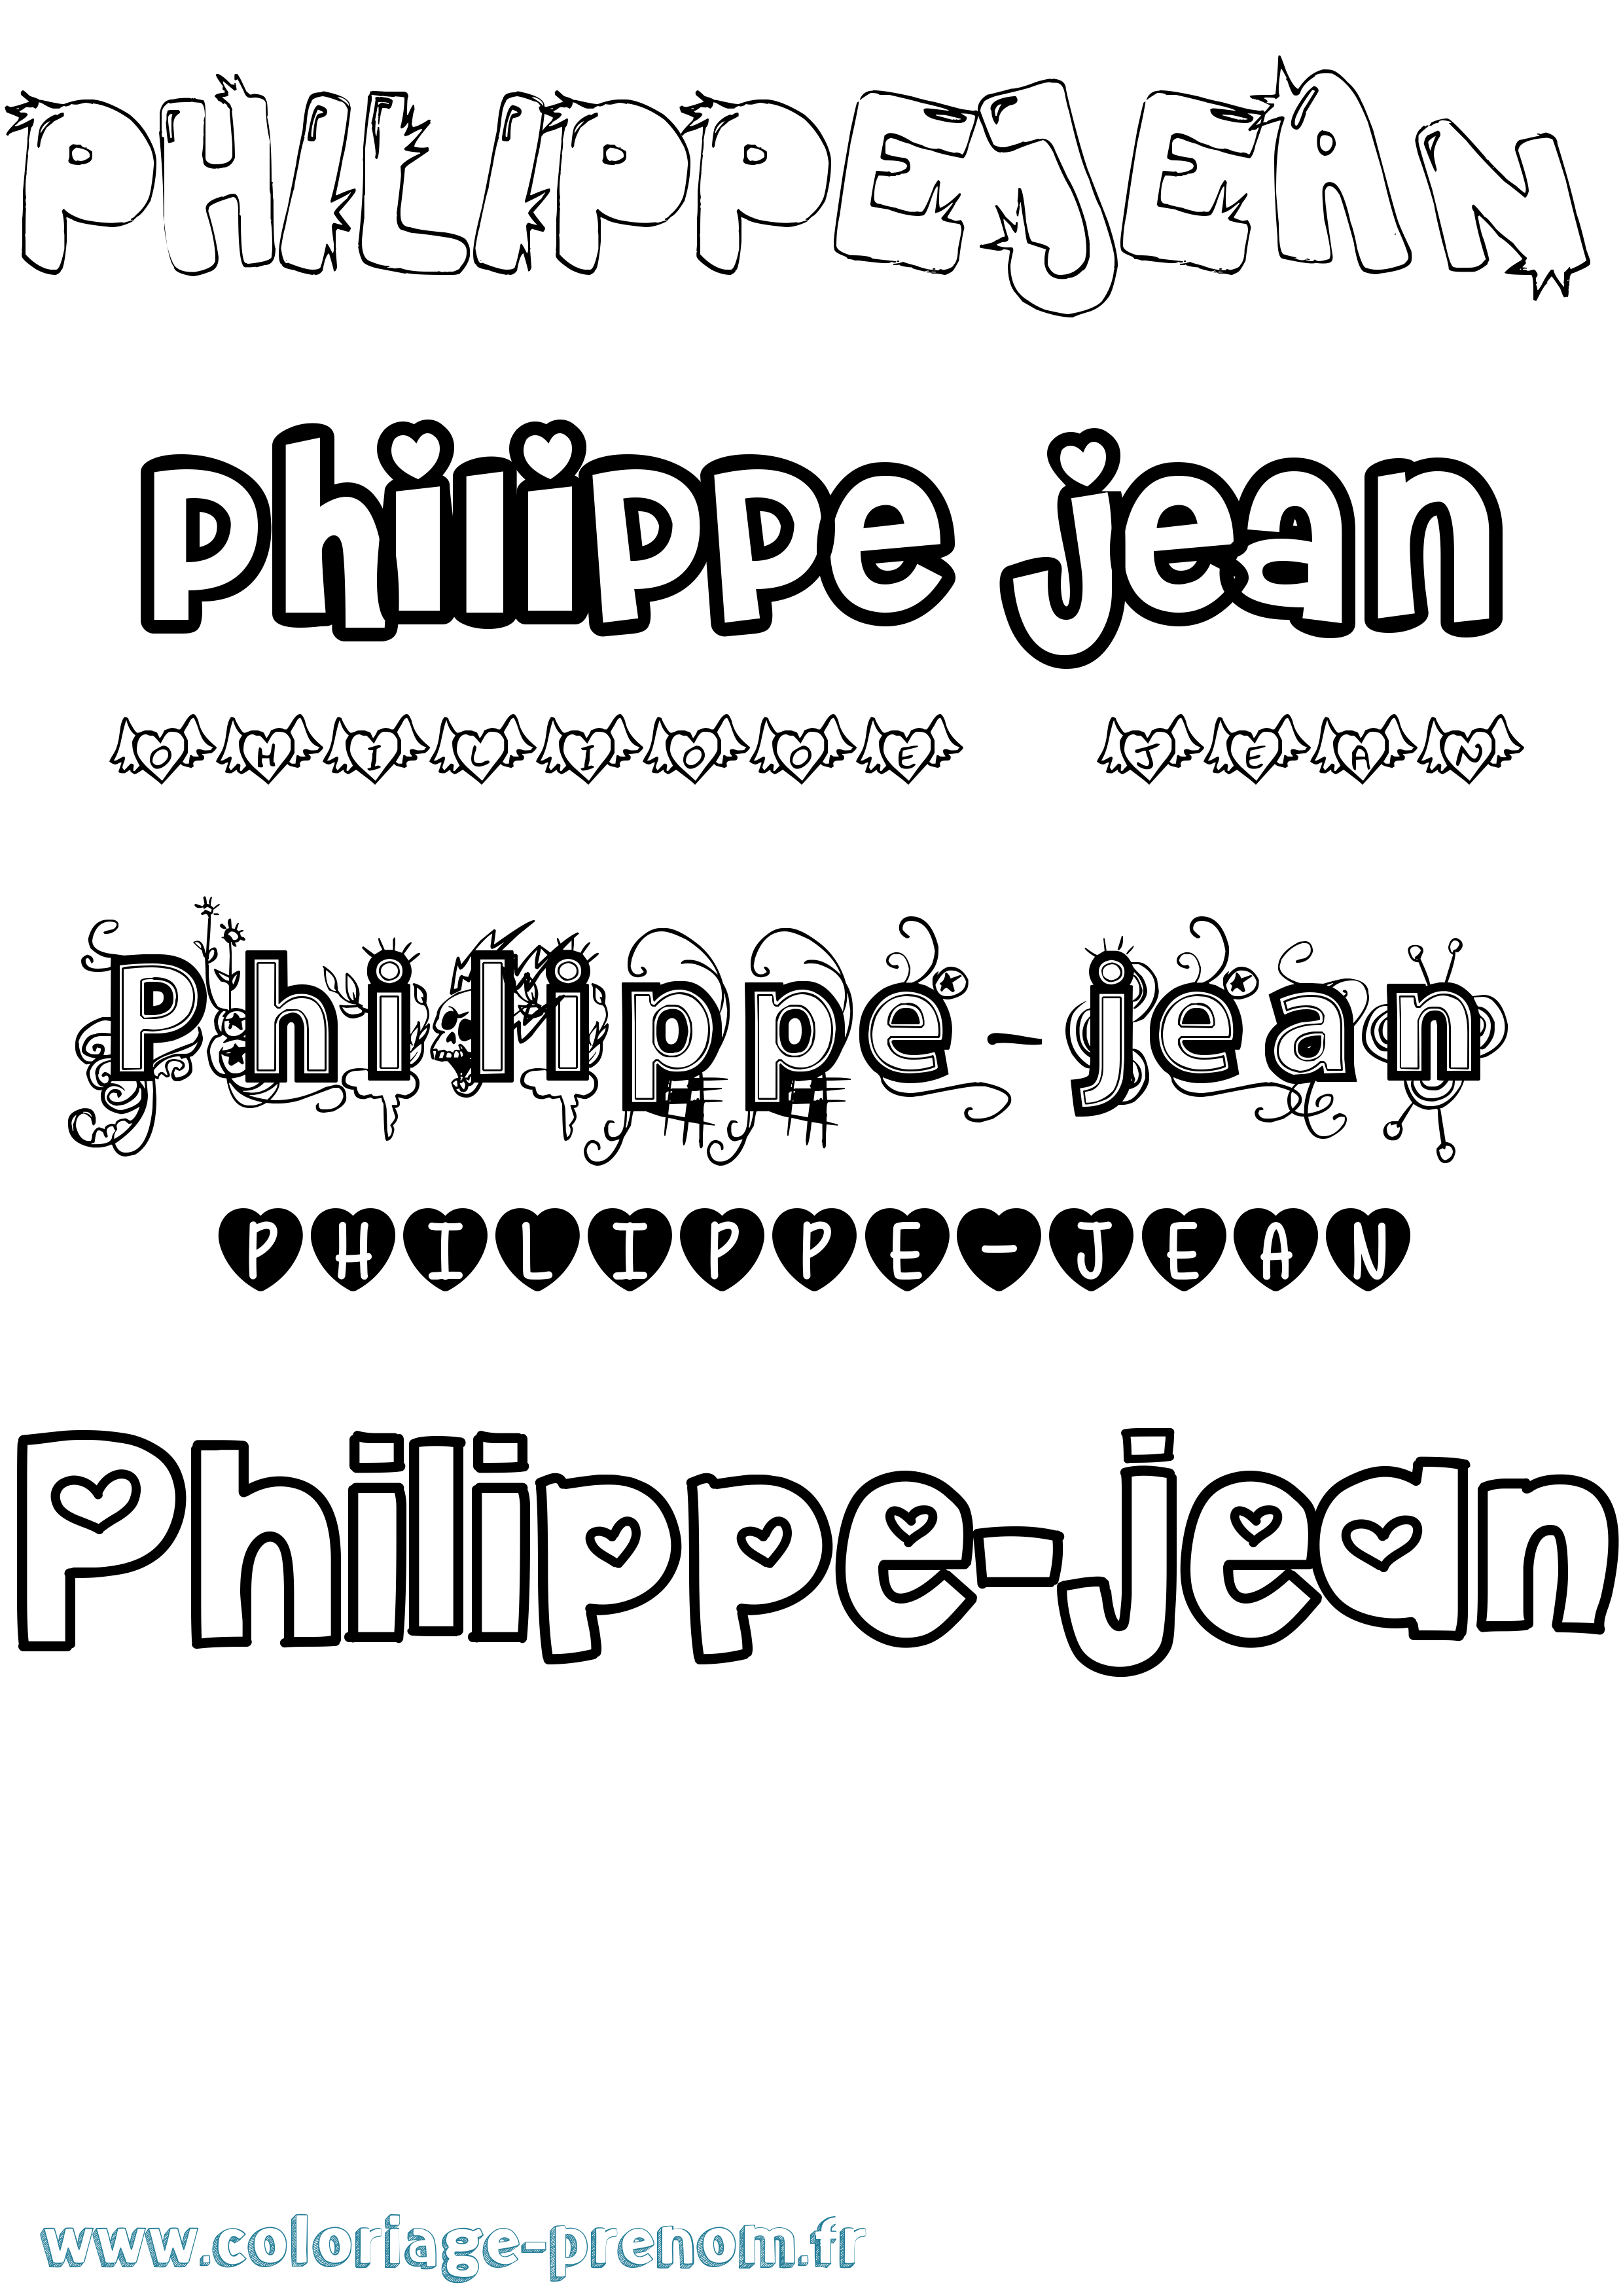 Coloriage prénom Philippe-Jean Girly